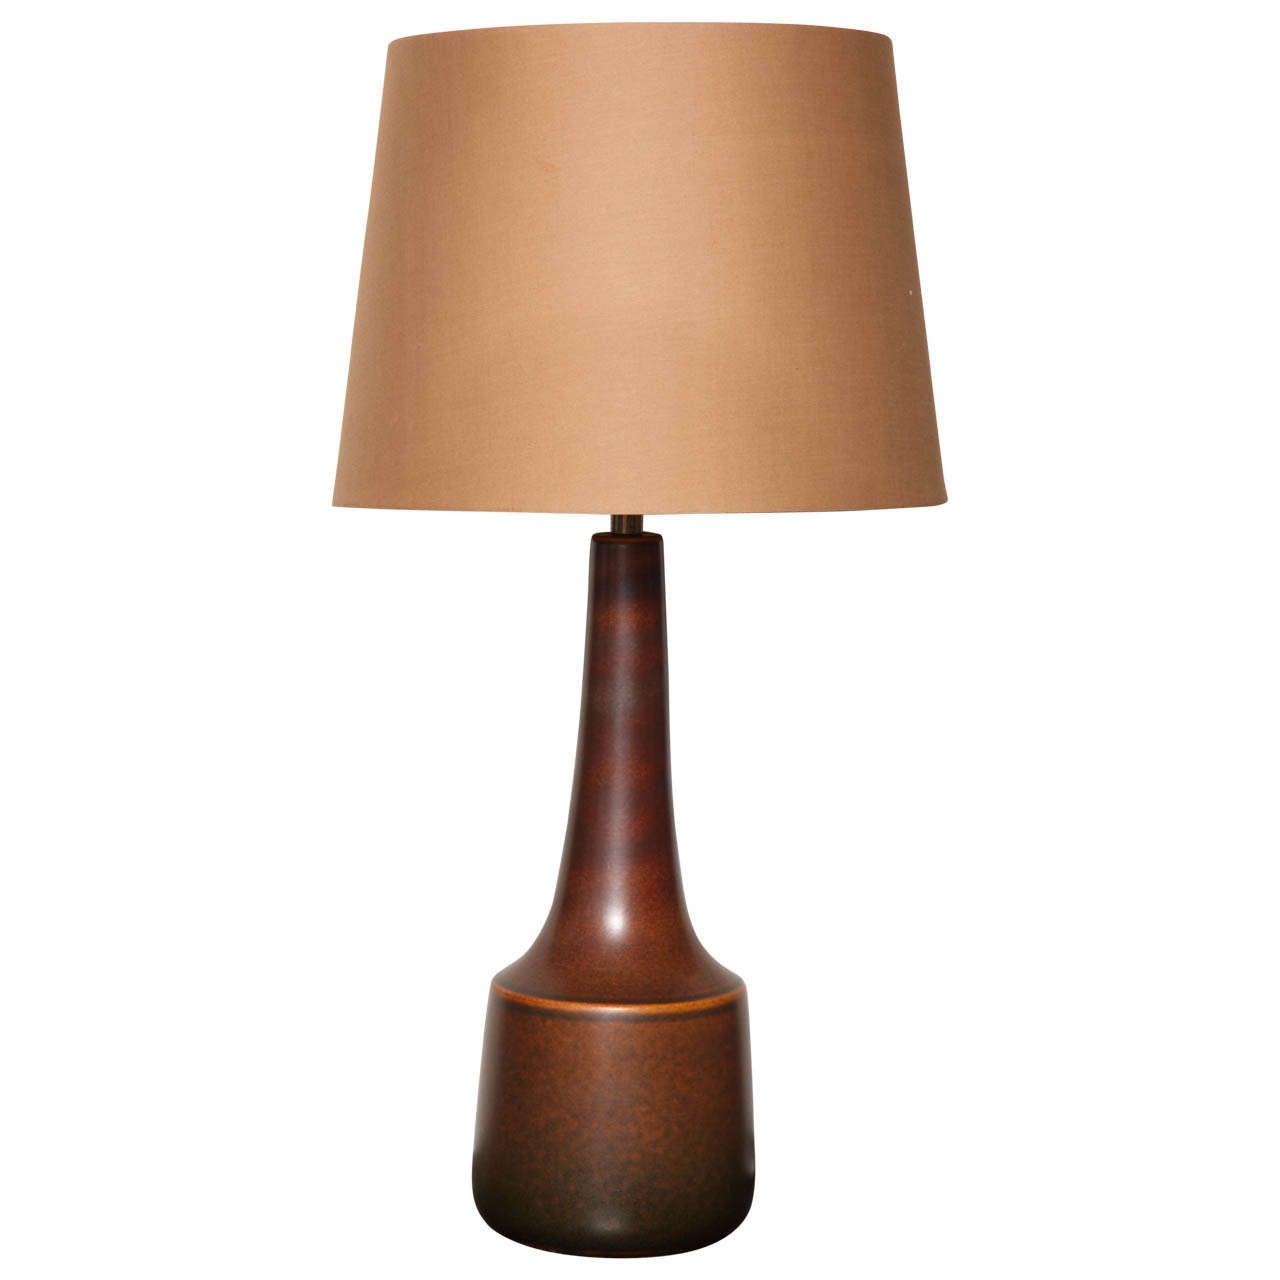 Mid-20th Century Terracotta Lamp